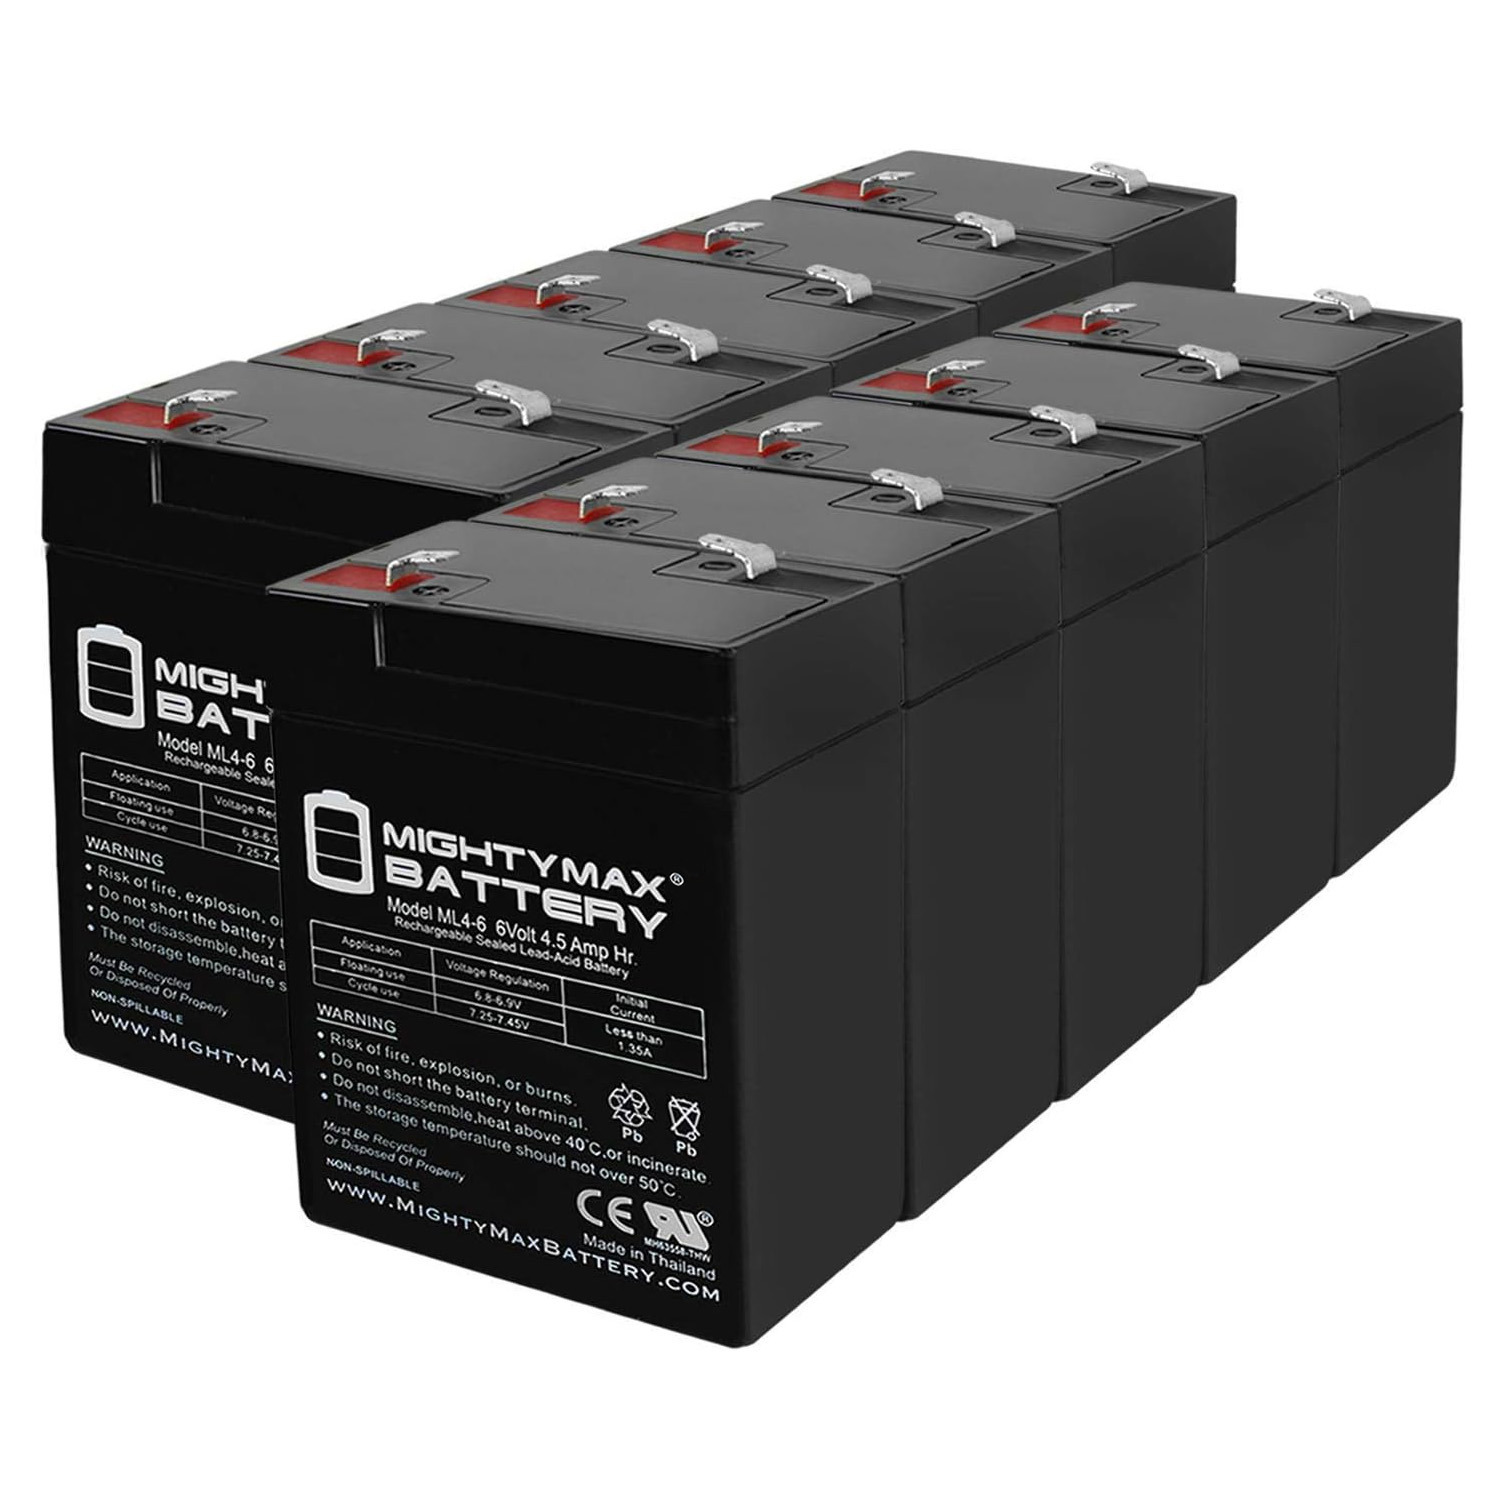 6V 4.5AH SLA Replacement Battery for Emergi-Lite PSM9 - 10 Pack